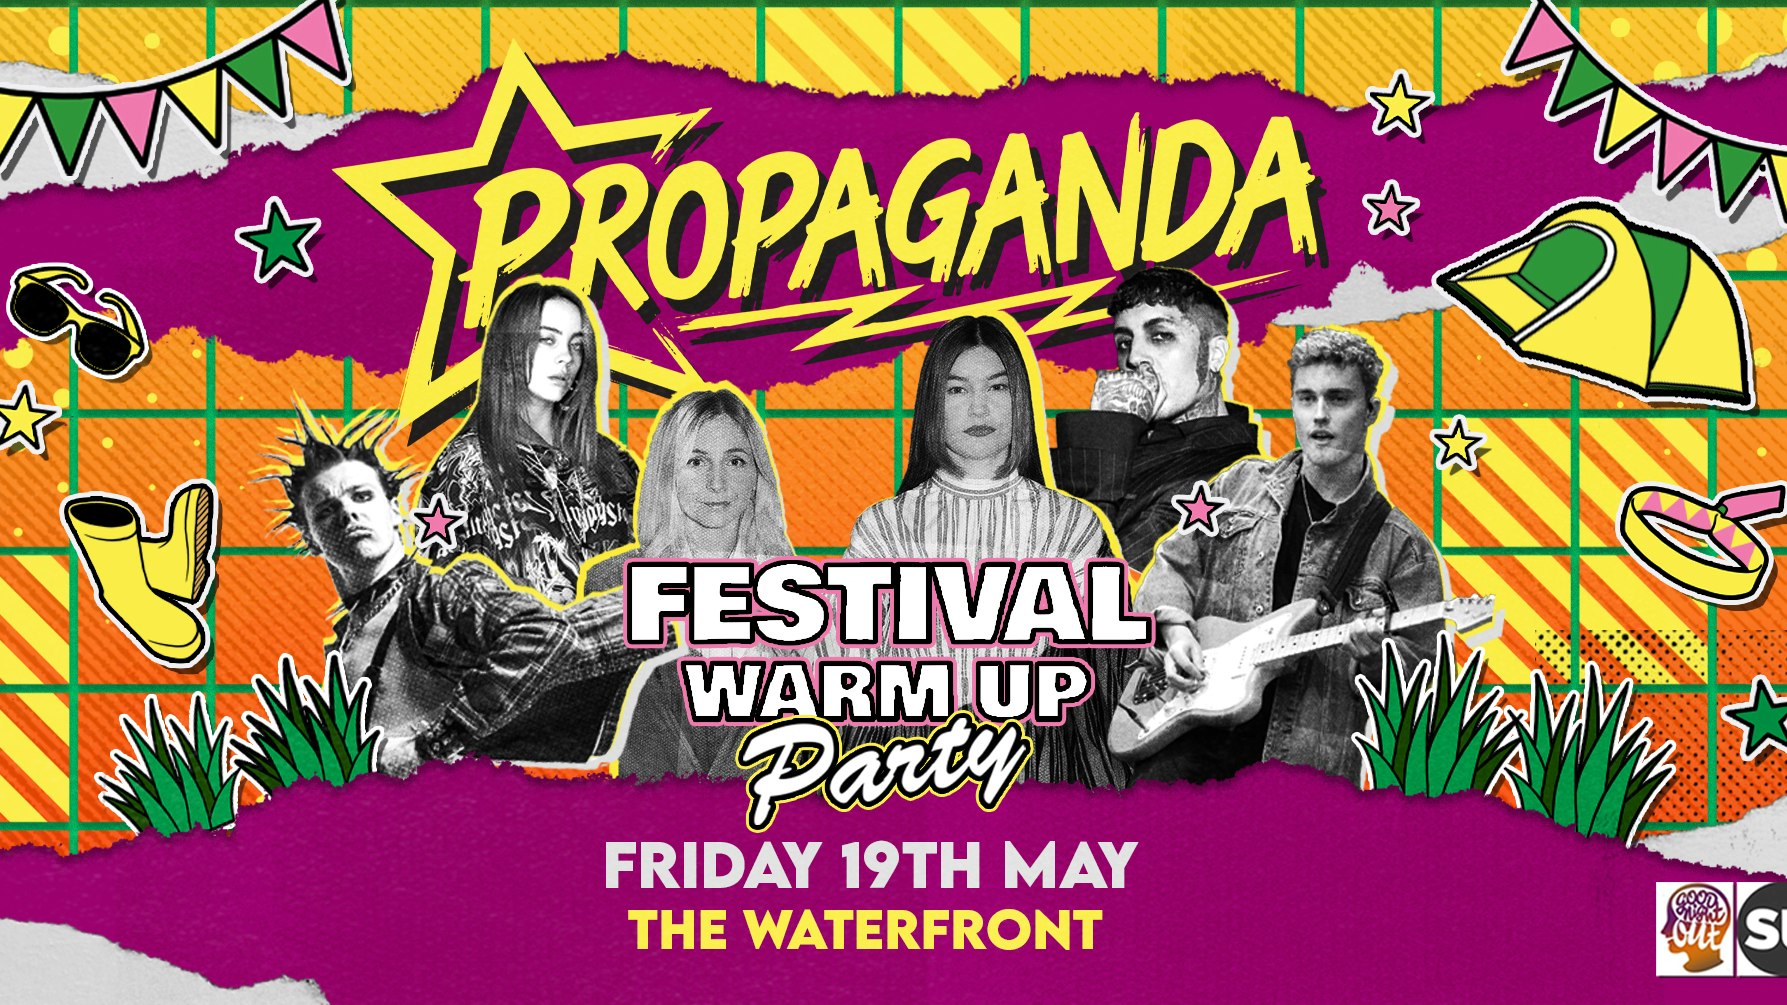 Propaganda Norwich – Festival Warm-up Party!